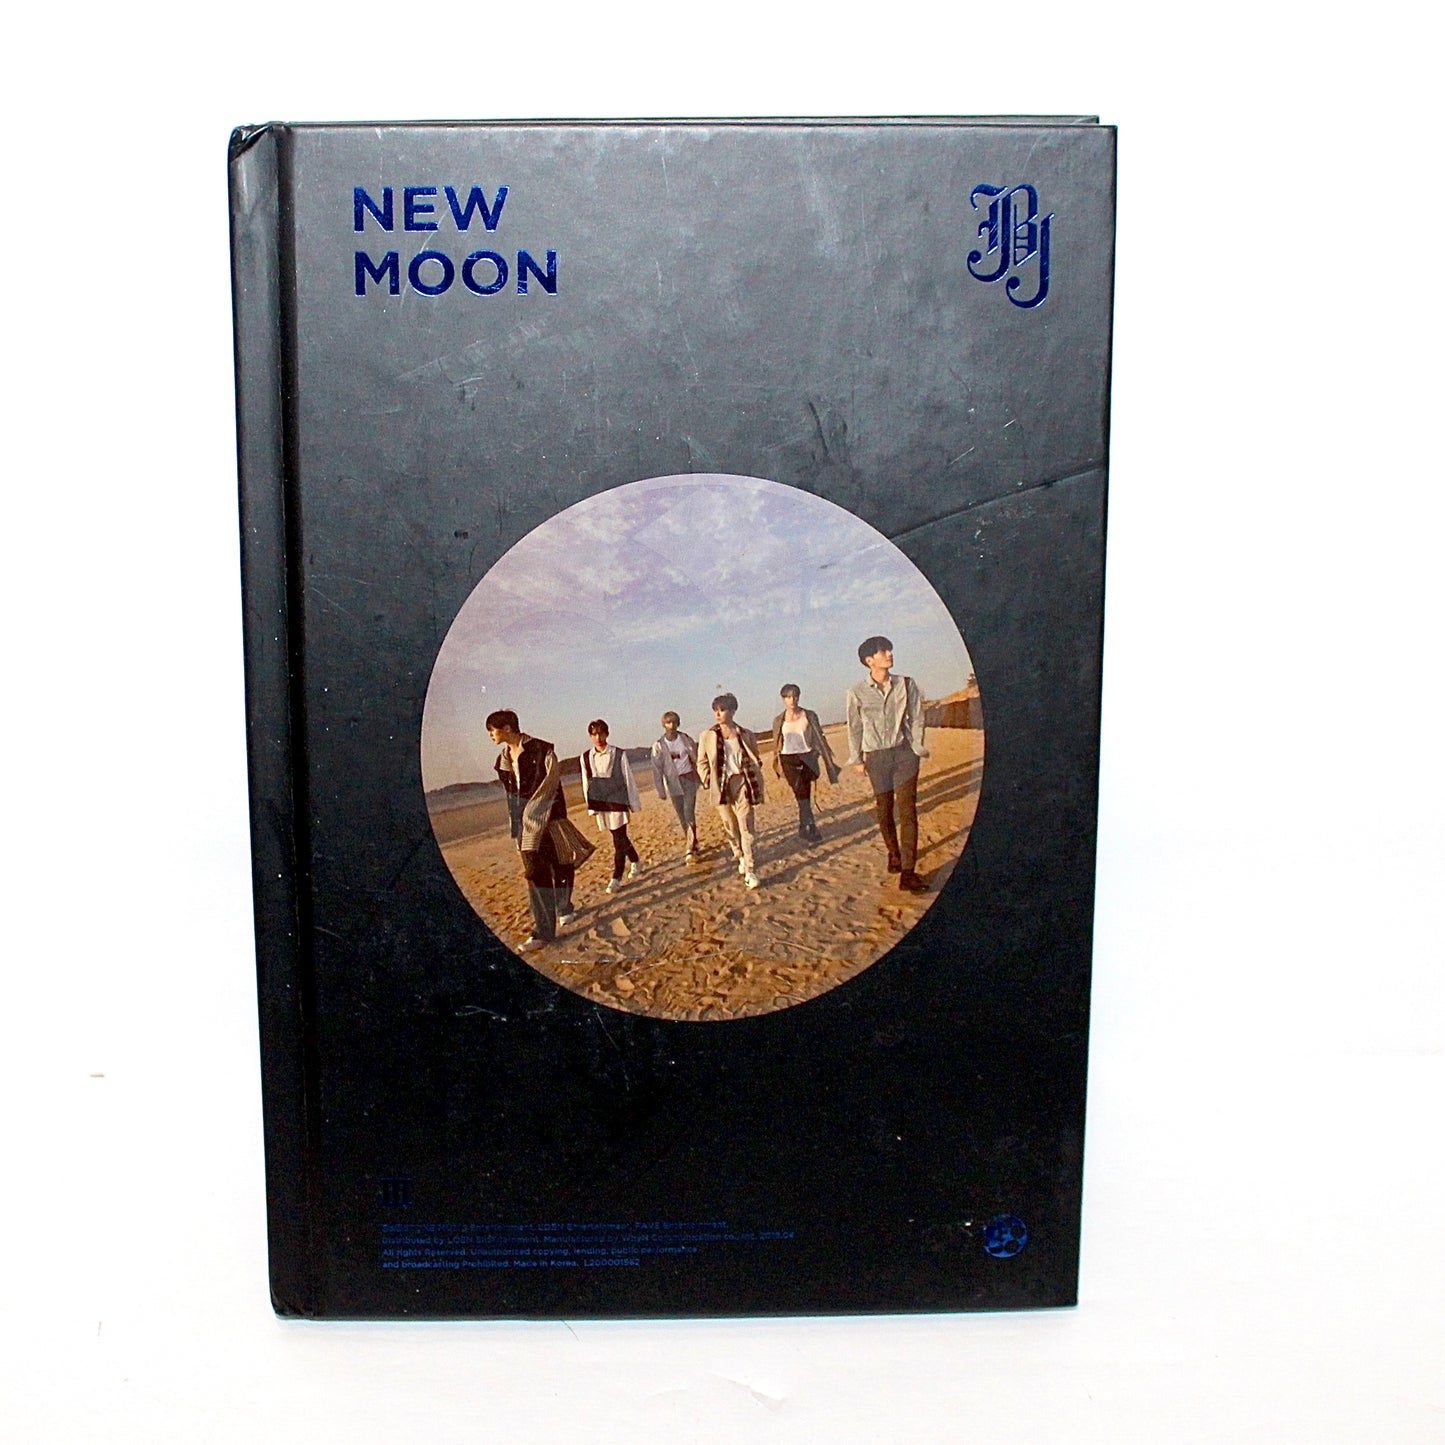 JBJ Special Album: New Moon